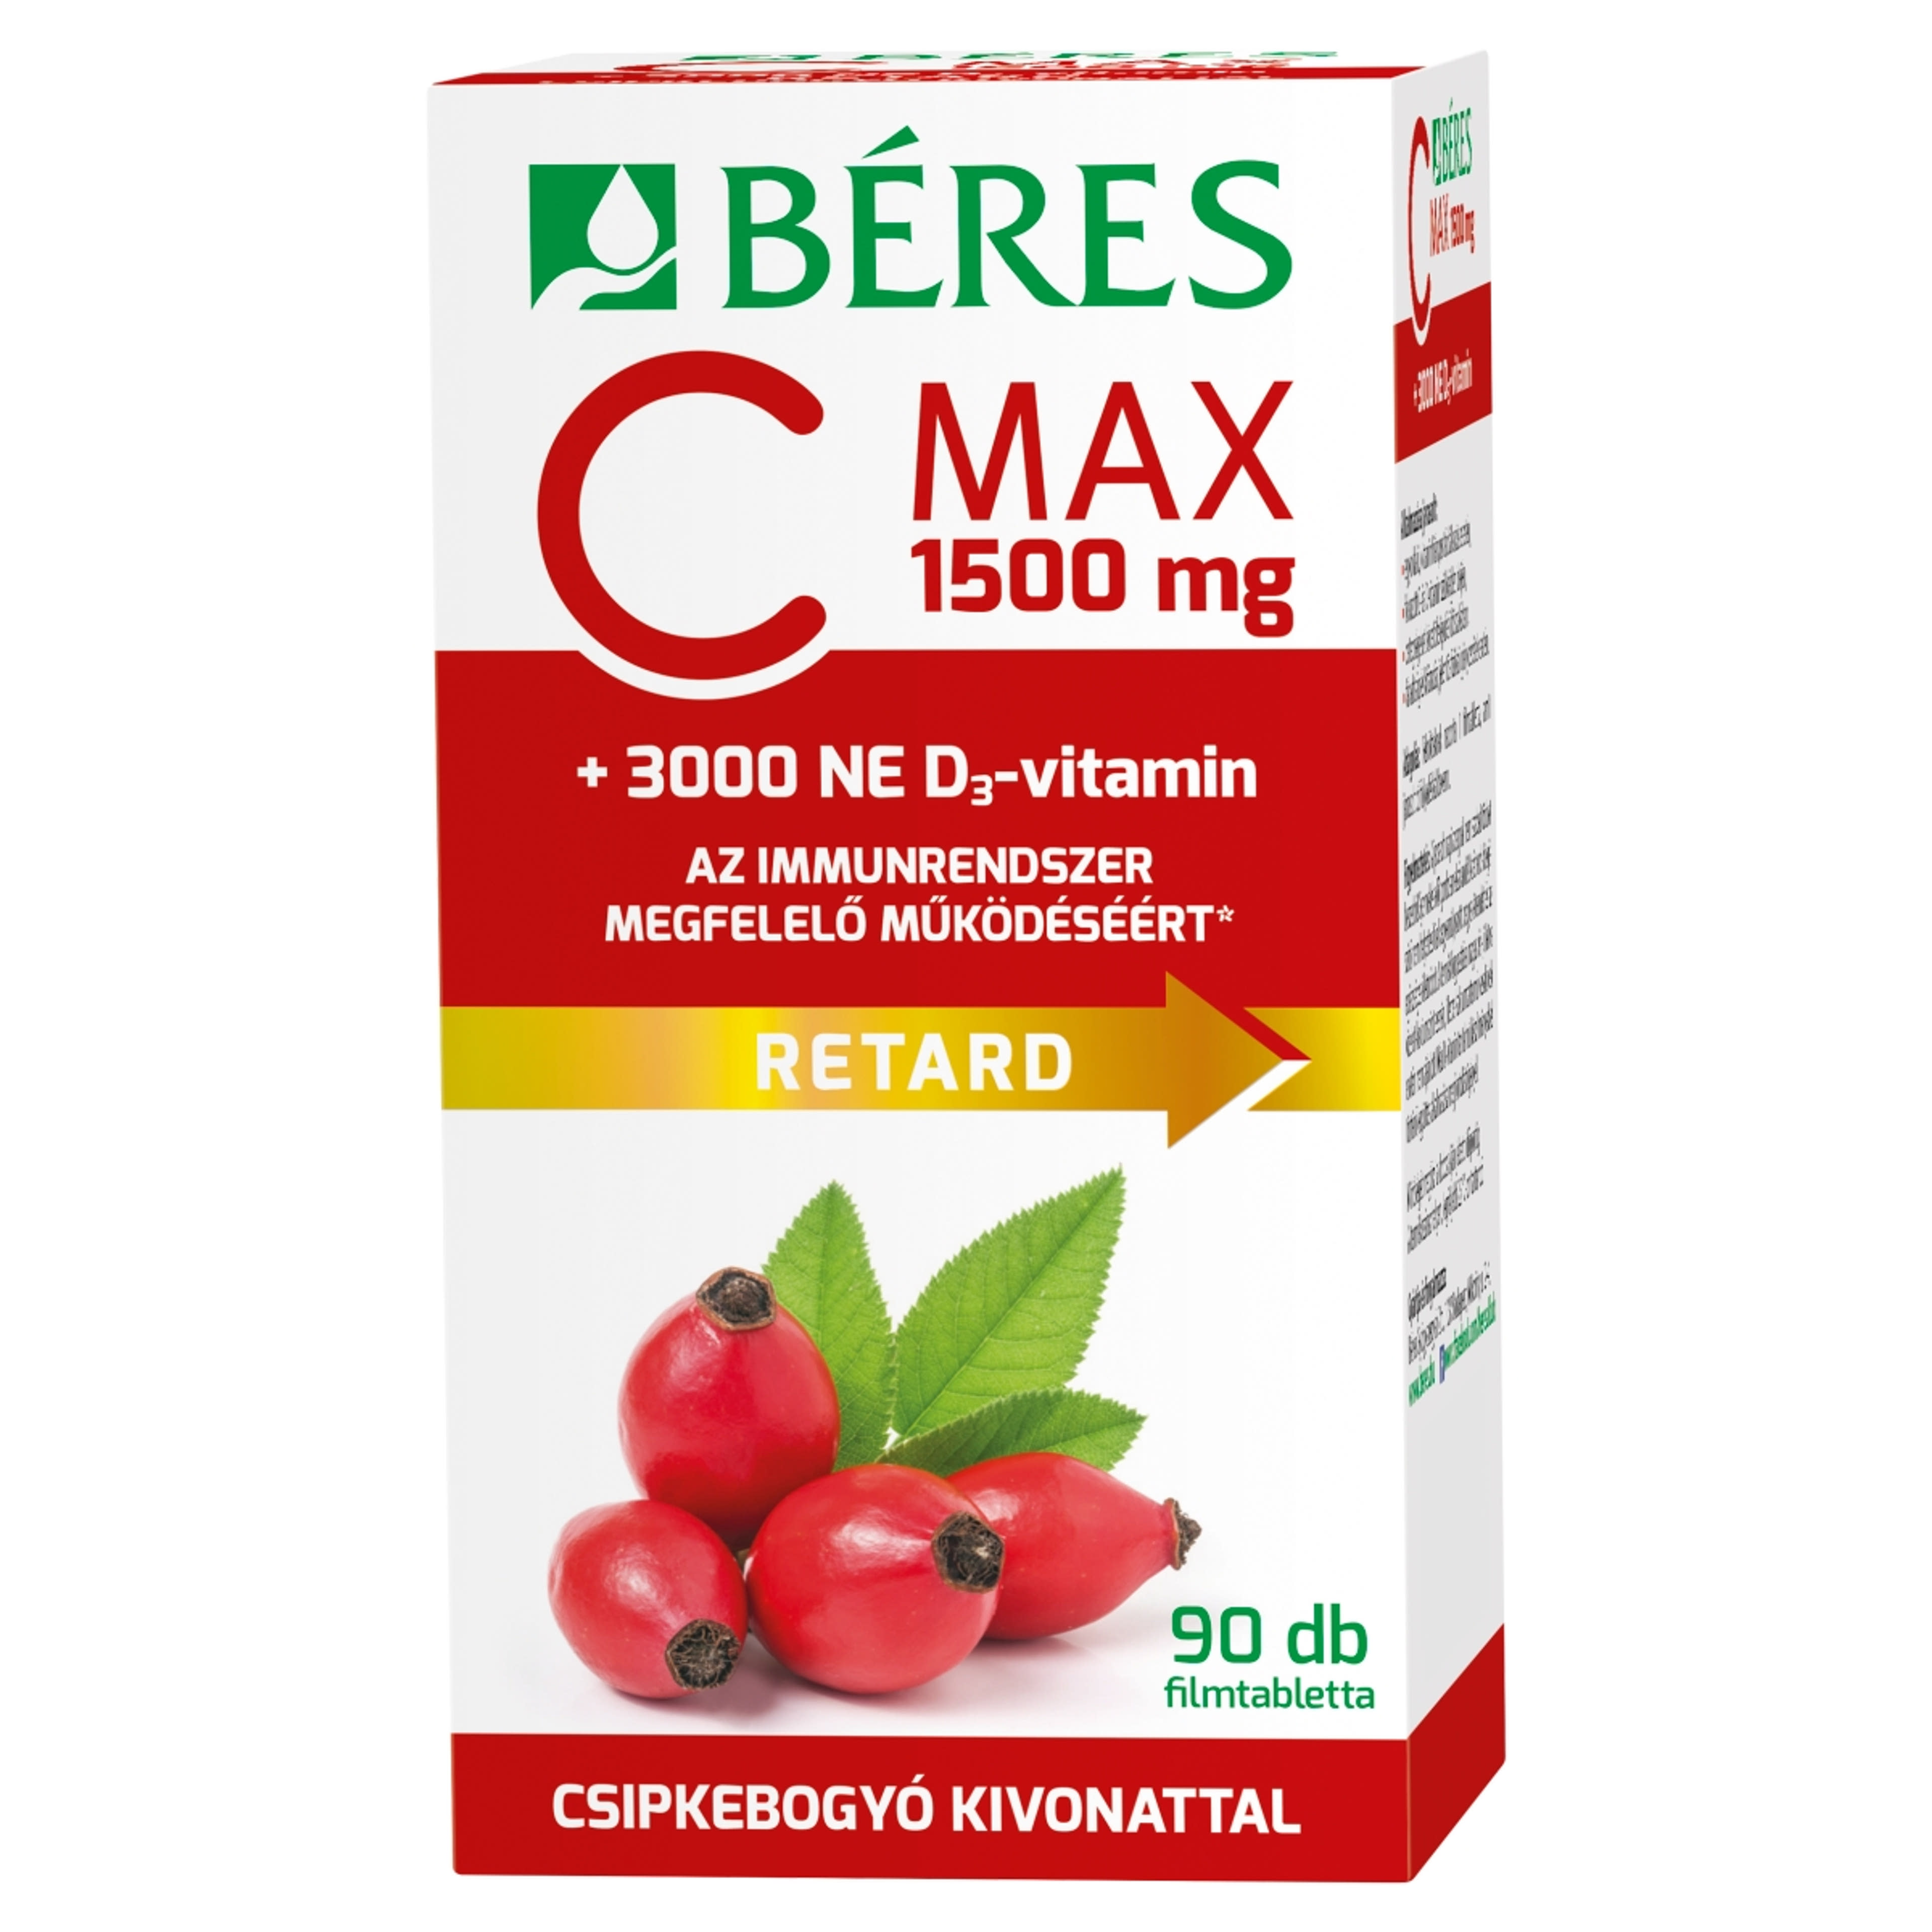 Béres C MAX 1500 mg RETARD csipkebogyó kivonattal + 3000 NE D₃-vitamin filmtabletta - 90 db-2